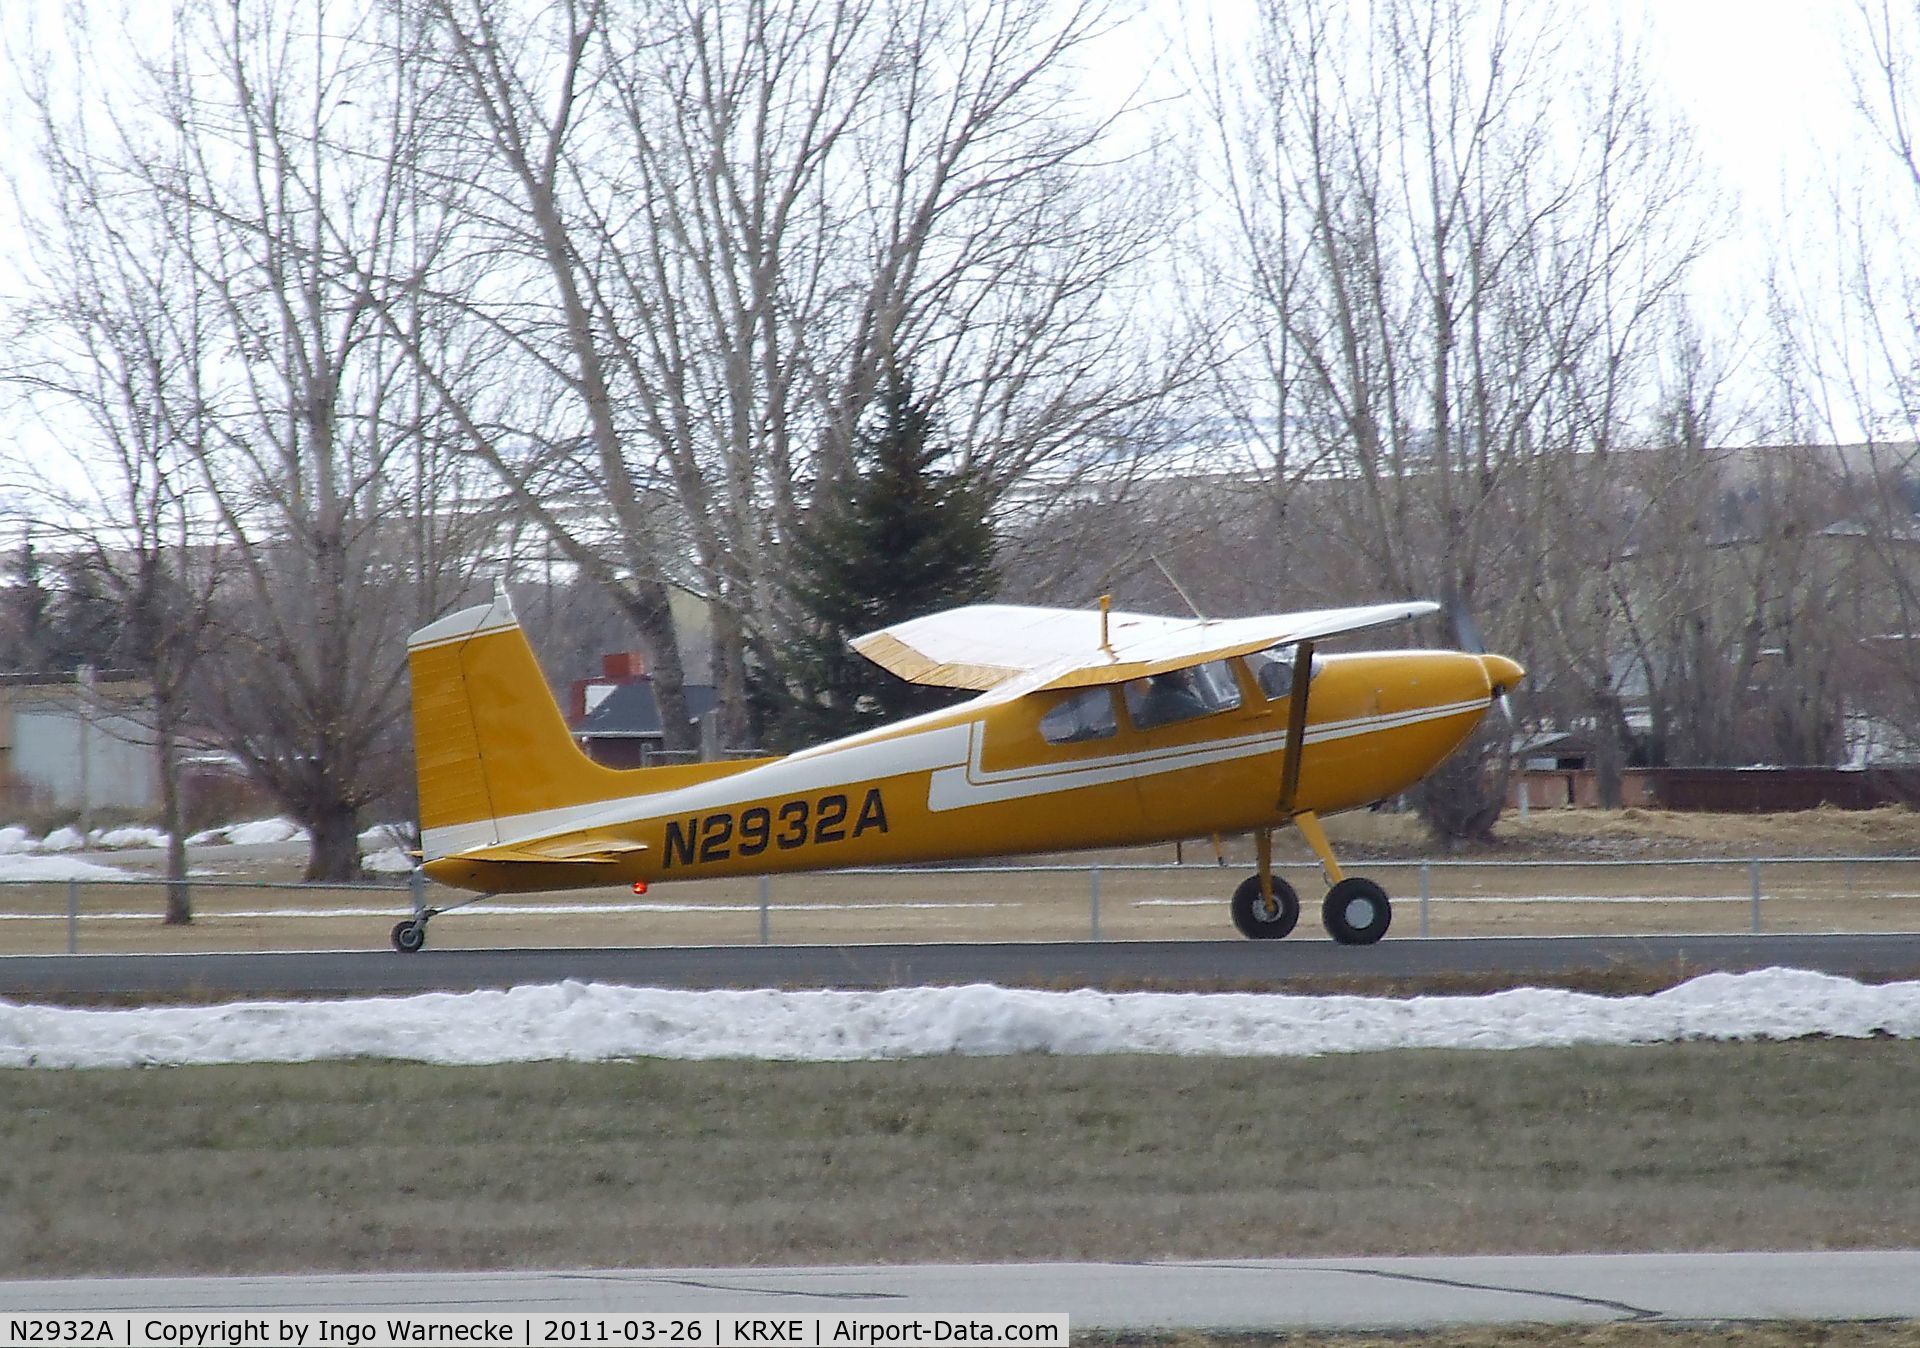 N2932A, 1953 Cessna 180 C/N 30132, Cessna 180 Skywagon at Rexburg-Madison County airport, Rexburg ID